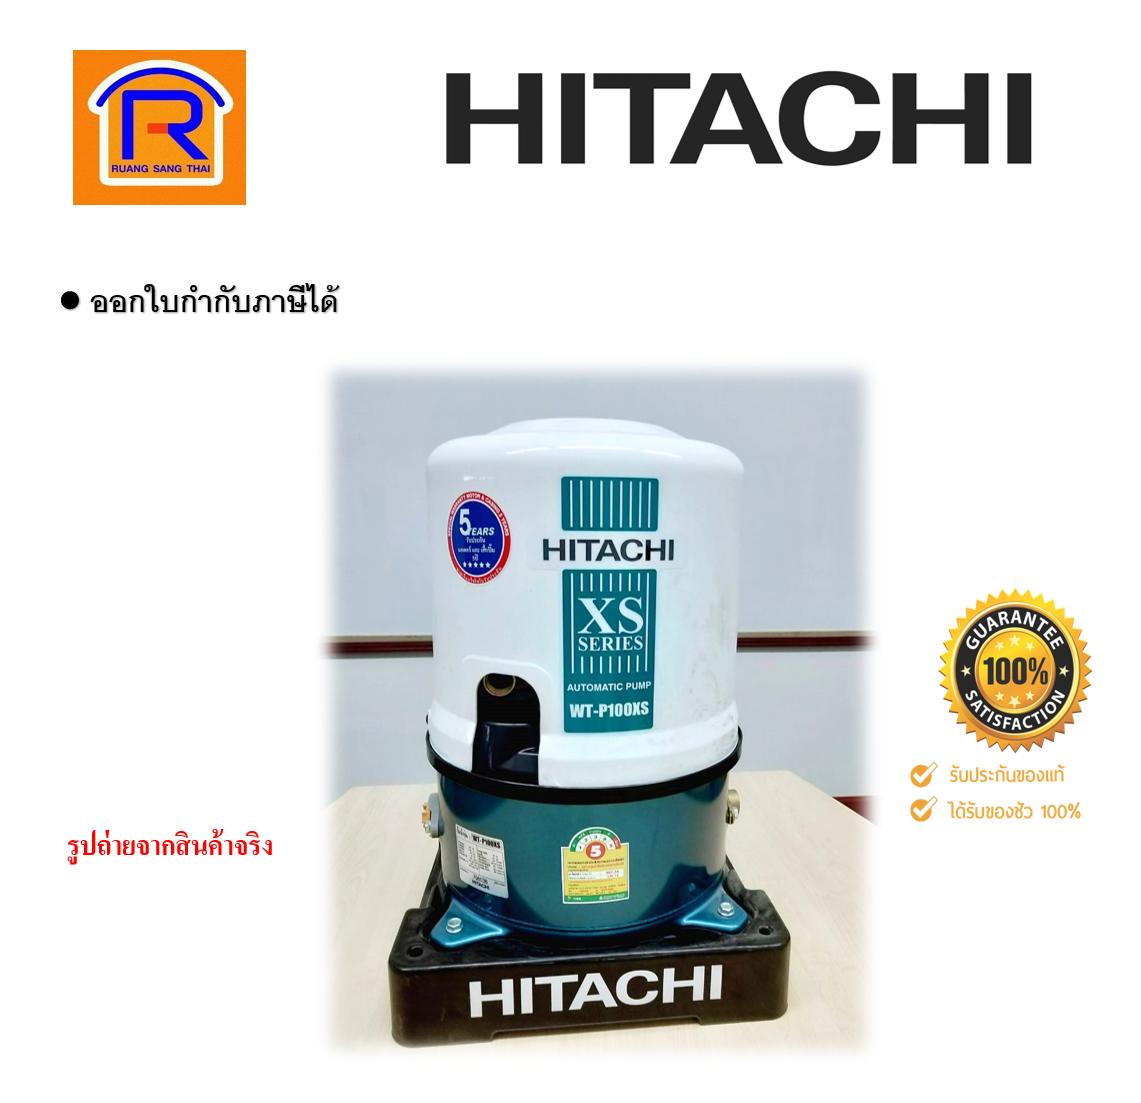 HITACHI (ฮิตาชิ) ปั๊มน้ำอัตโนมัติ ถังกลม 100 วัตต์ ถังสูง 3/4'' รุ่น WT-P100XS hitachi wt-p100xs wt p100xs 100W ปั๊ม ปั๊มน้ำออโต้  (9353766)